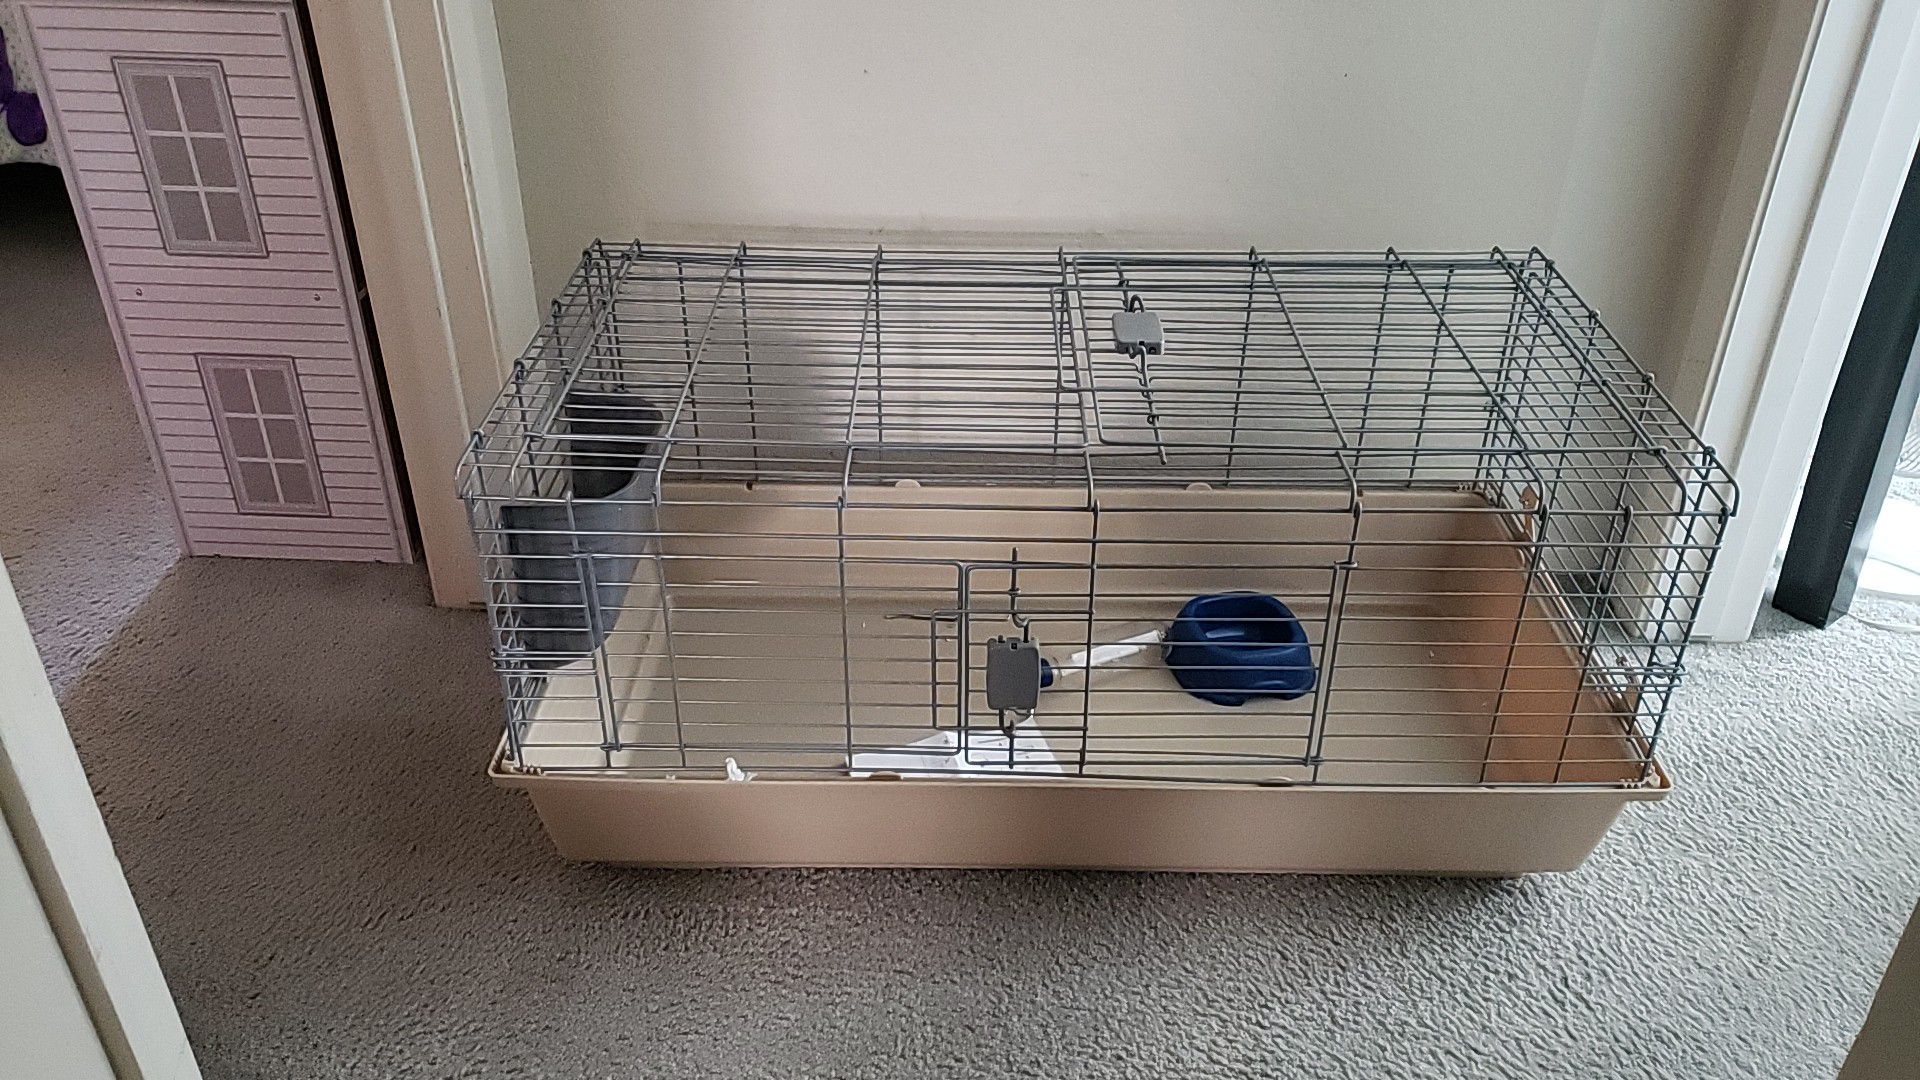 Small animal habitat cage